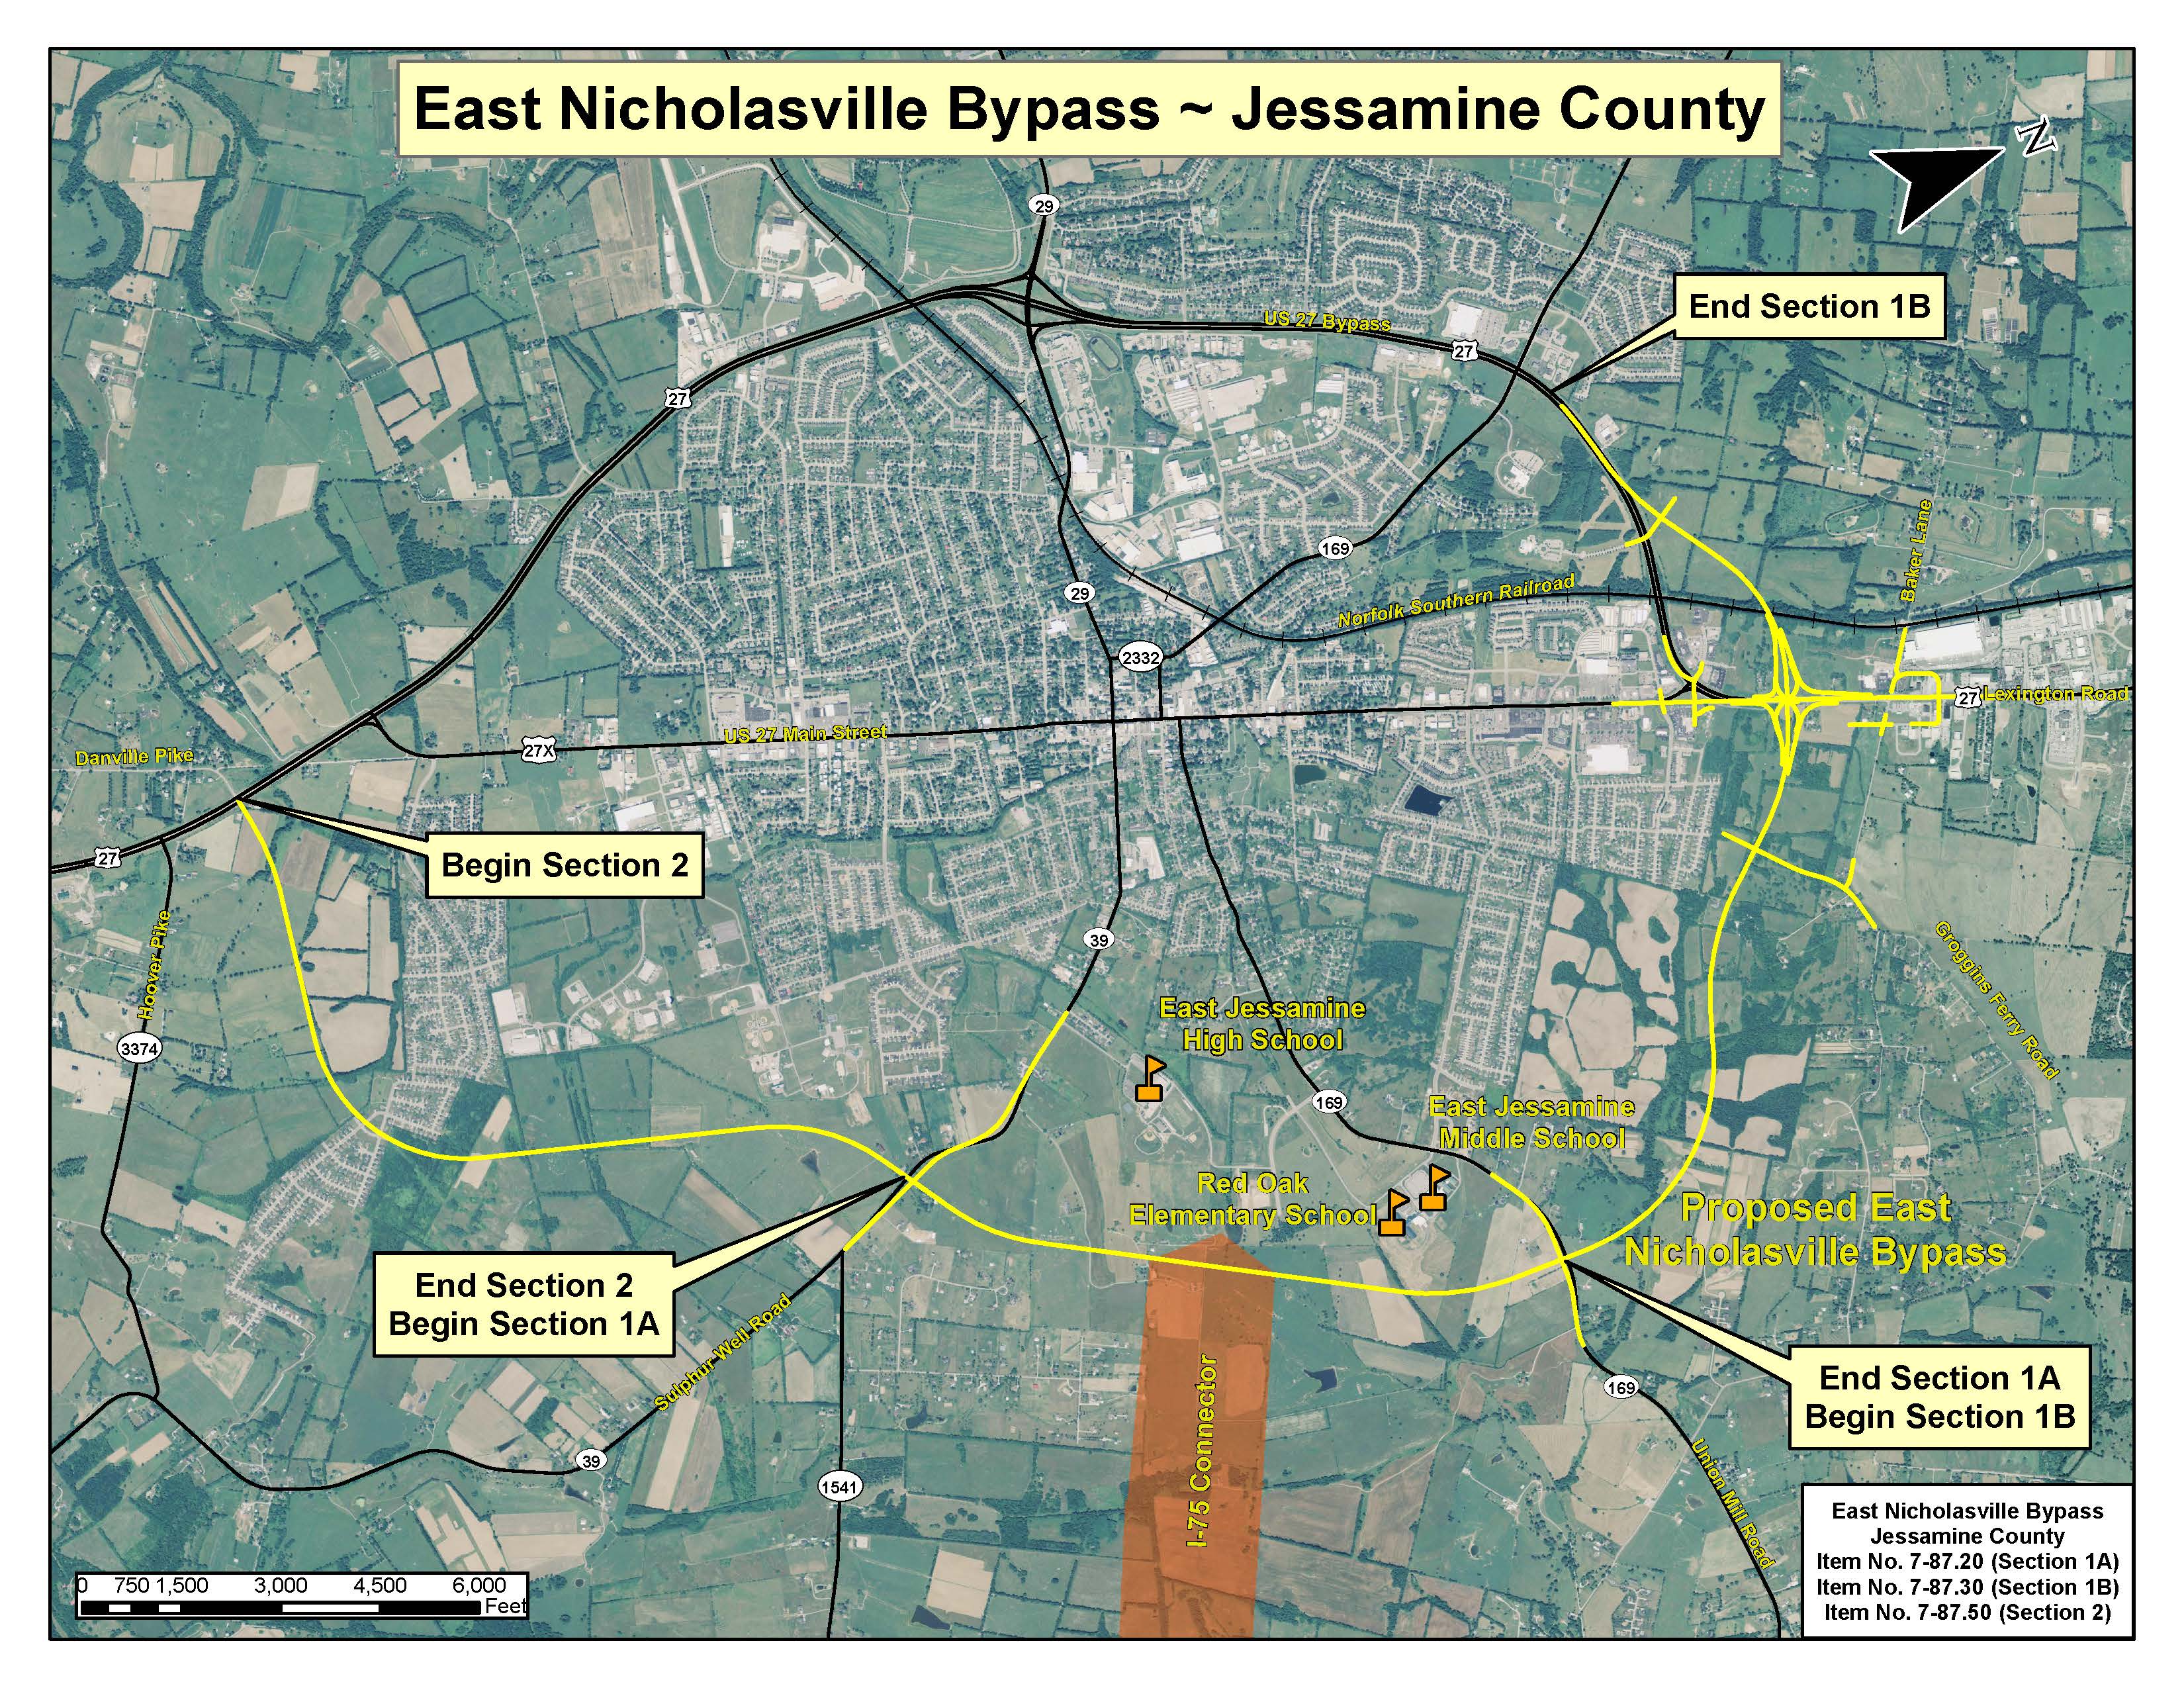 Nicholasville Bypass Website Display_4_27_16.jpg